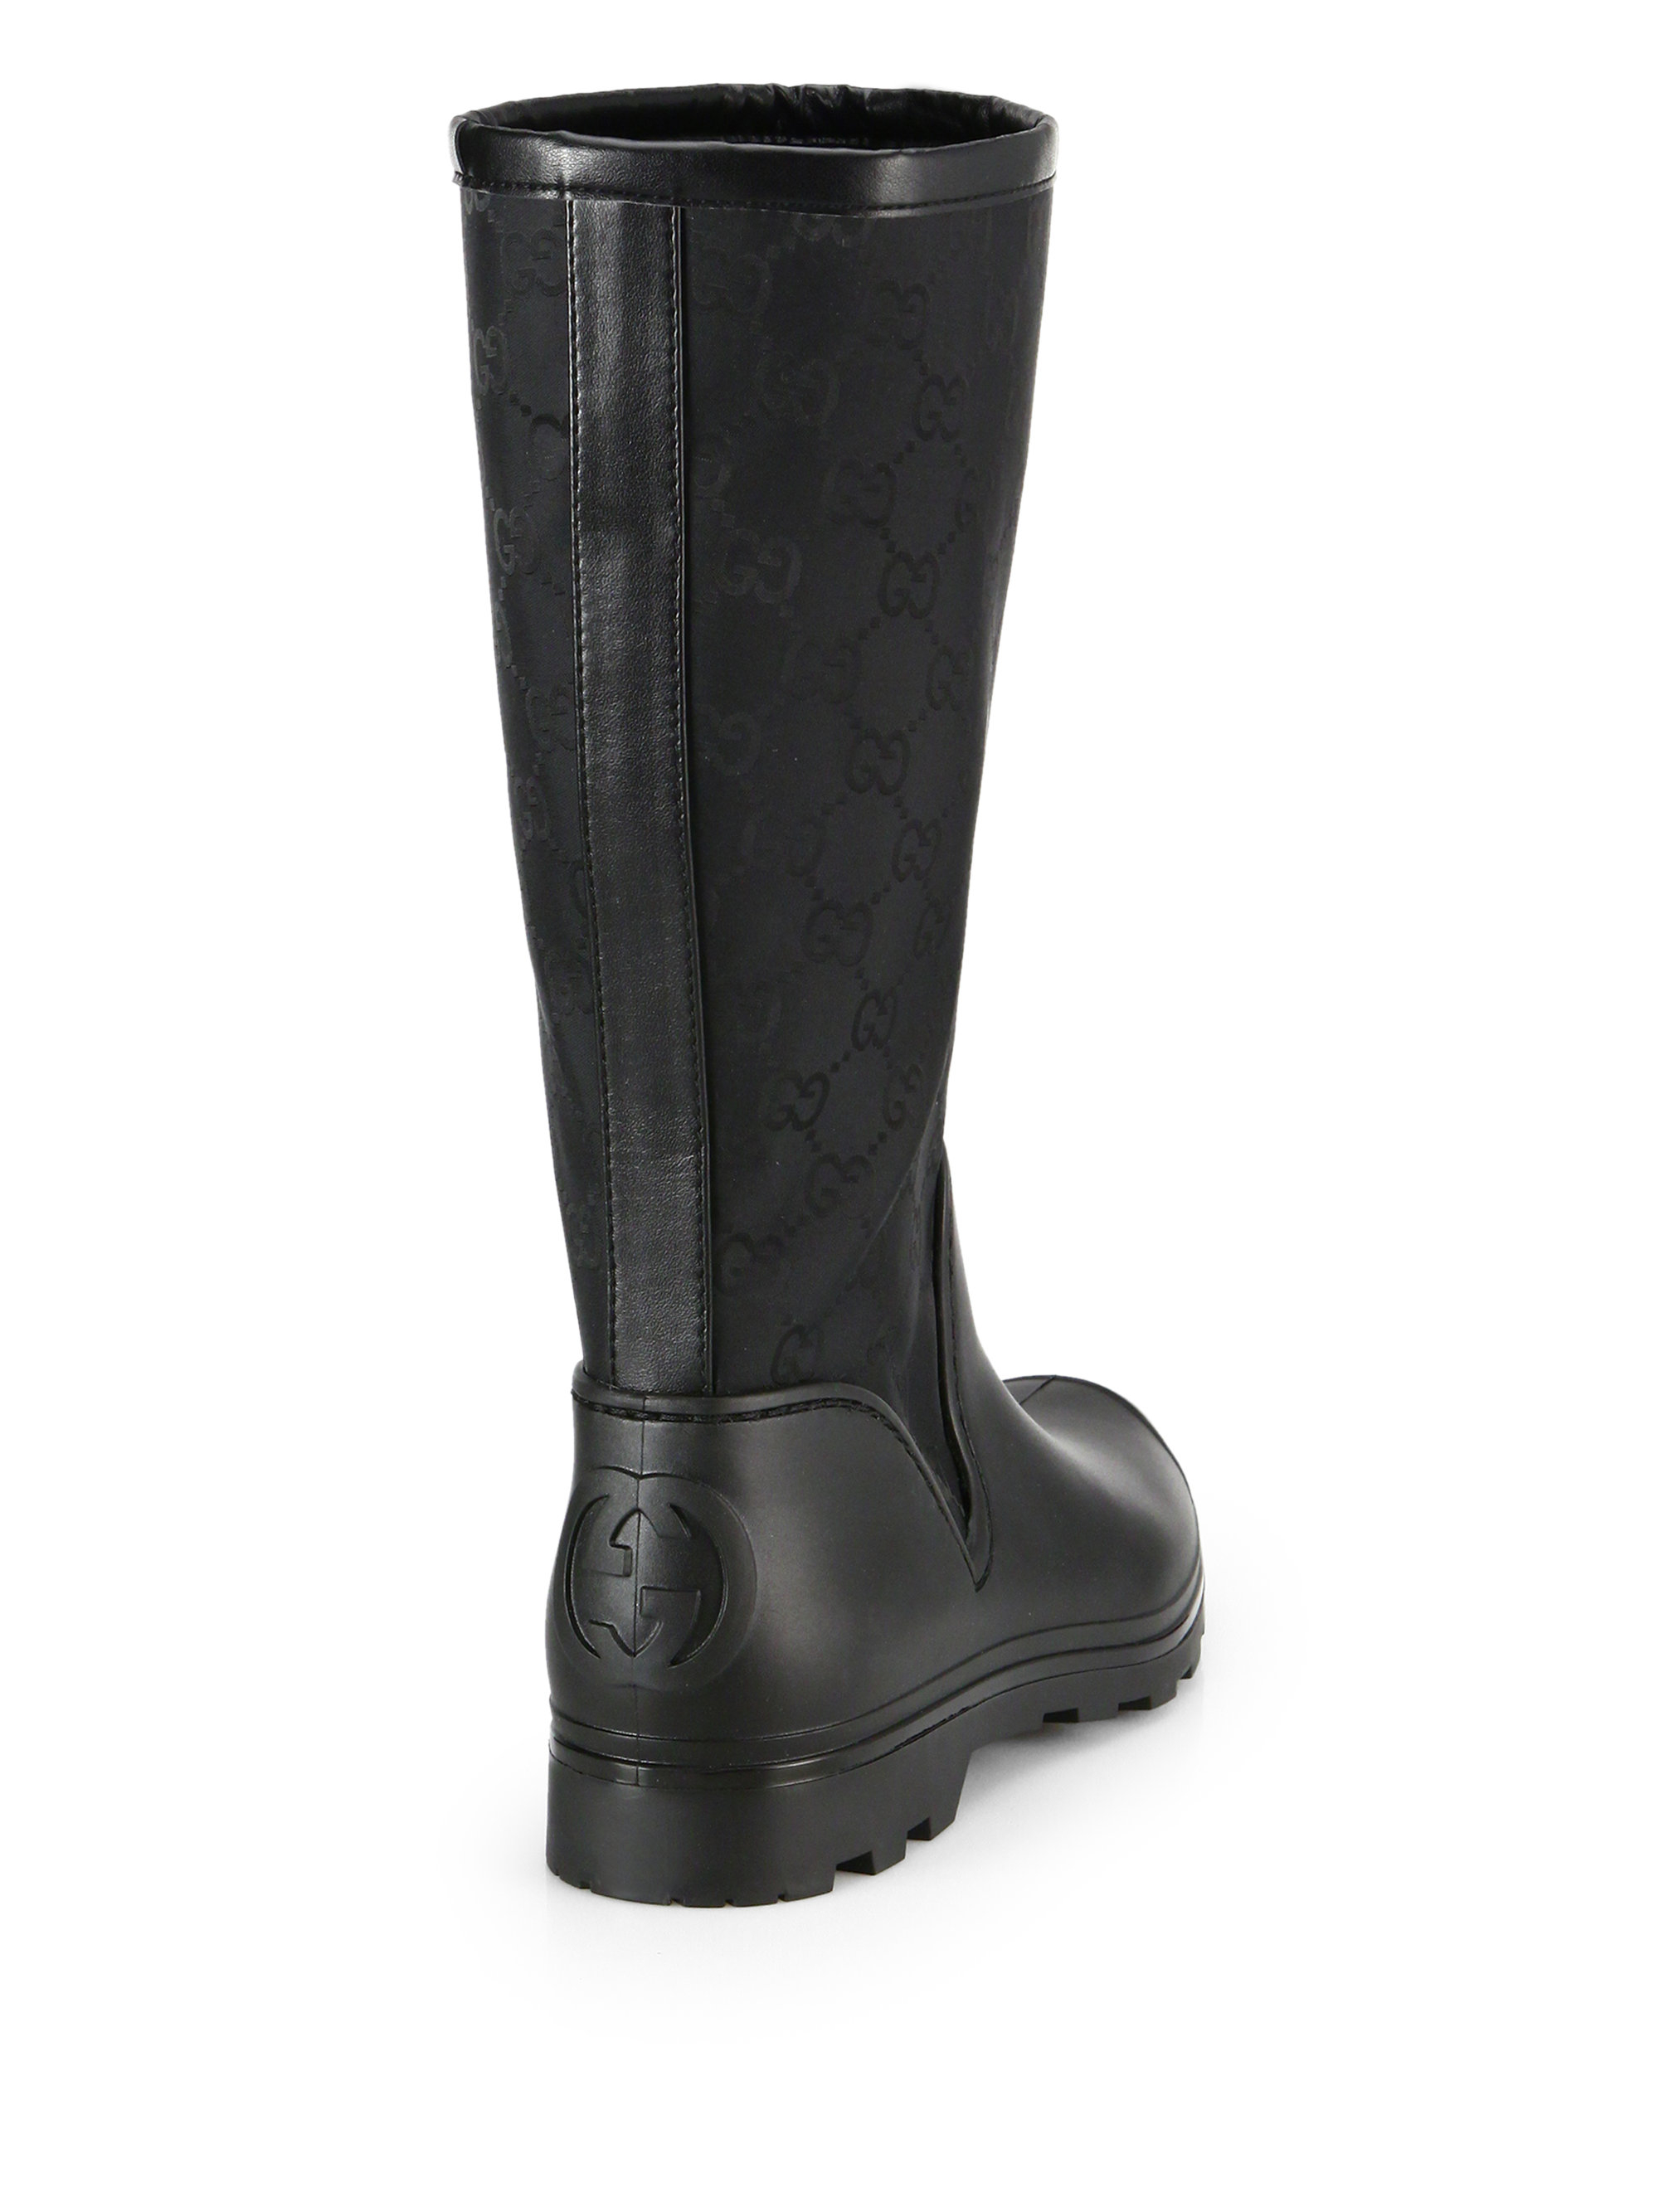 Lyst - Gucci Gg Short Rain Boots in Black